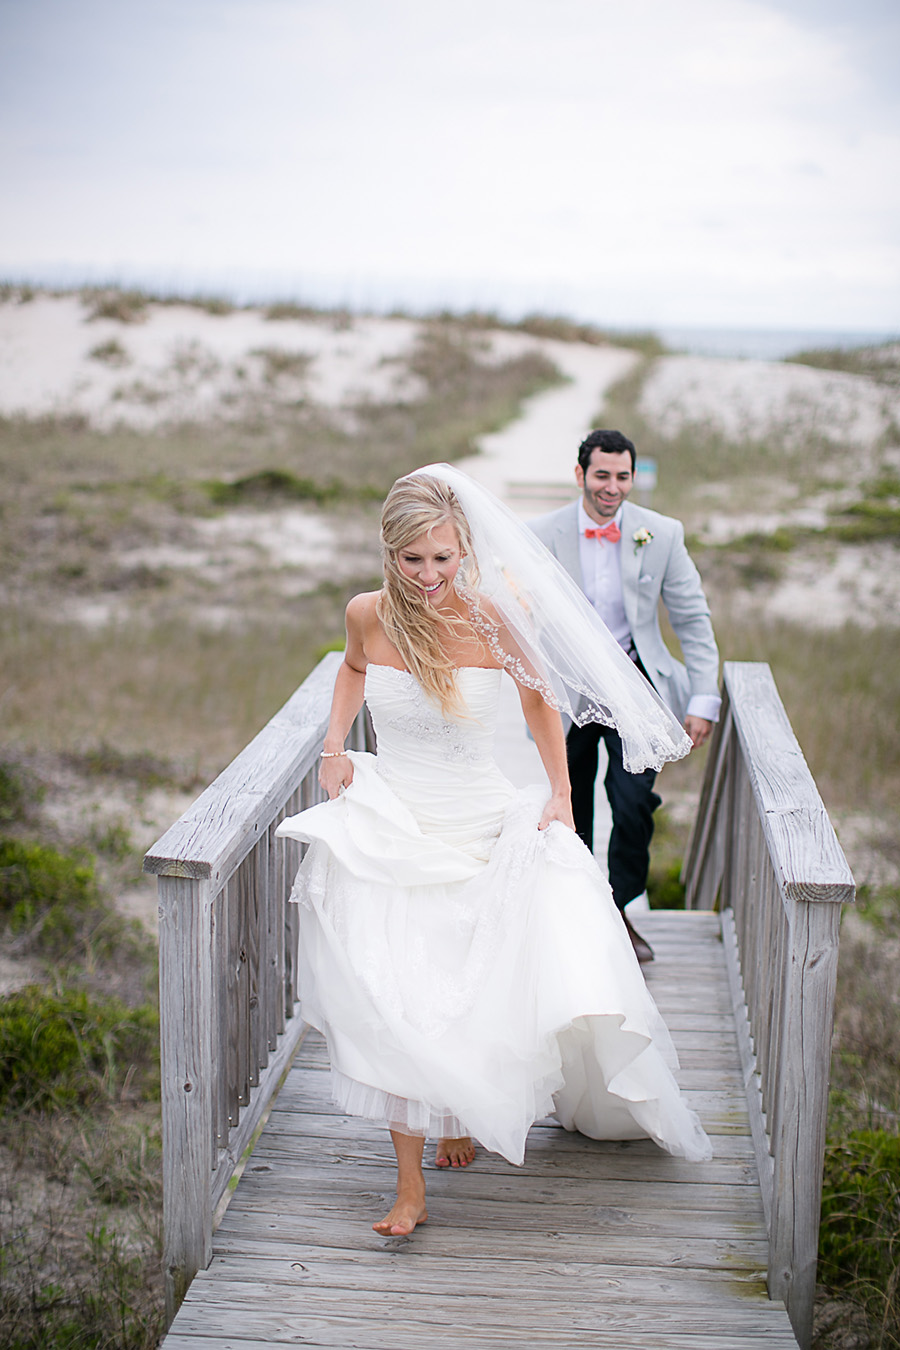 The Bride and Groom - Portraits - 17 - Bald Head Island Wedding - Photo by Eric Boneske